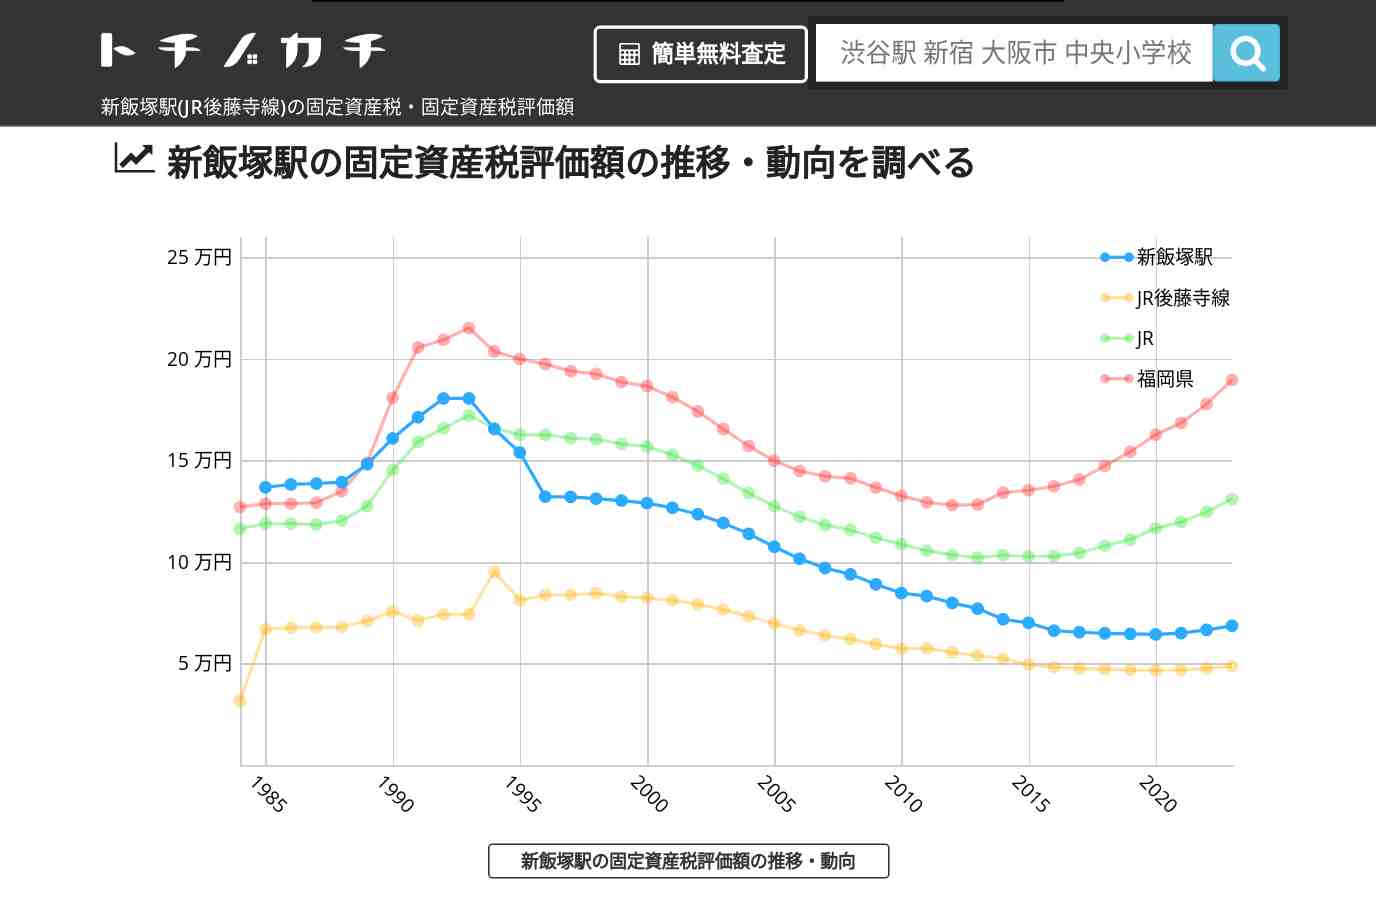 新飯塚駅(JR後藤寺線)の固定資産税・固定資産税評価額 | トチノカチ